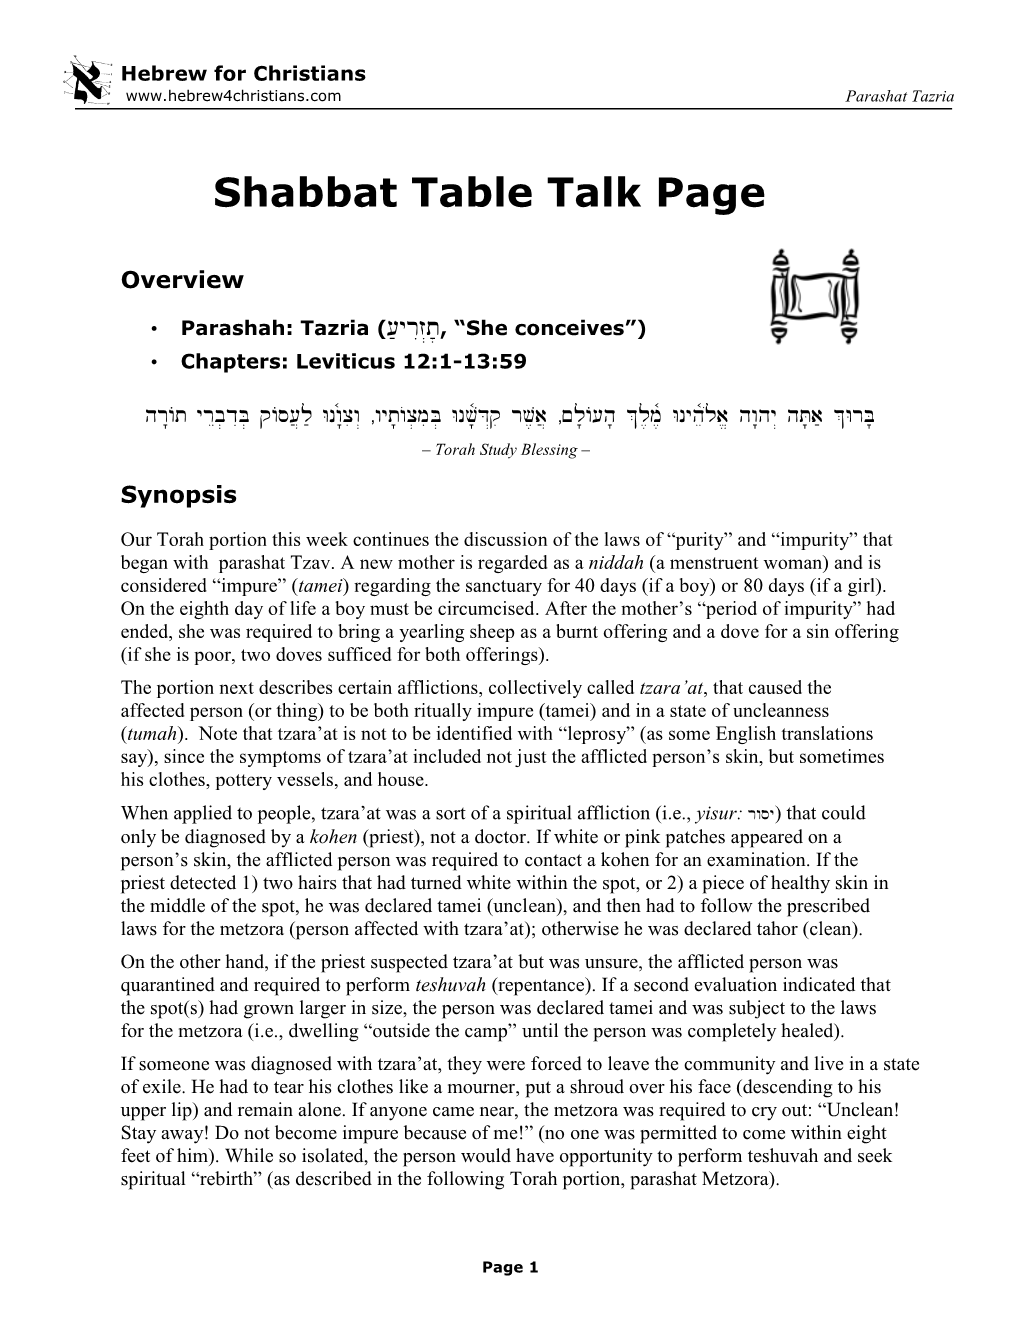 Shabbat Table Talk for Tazria